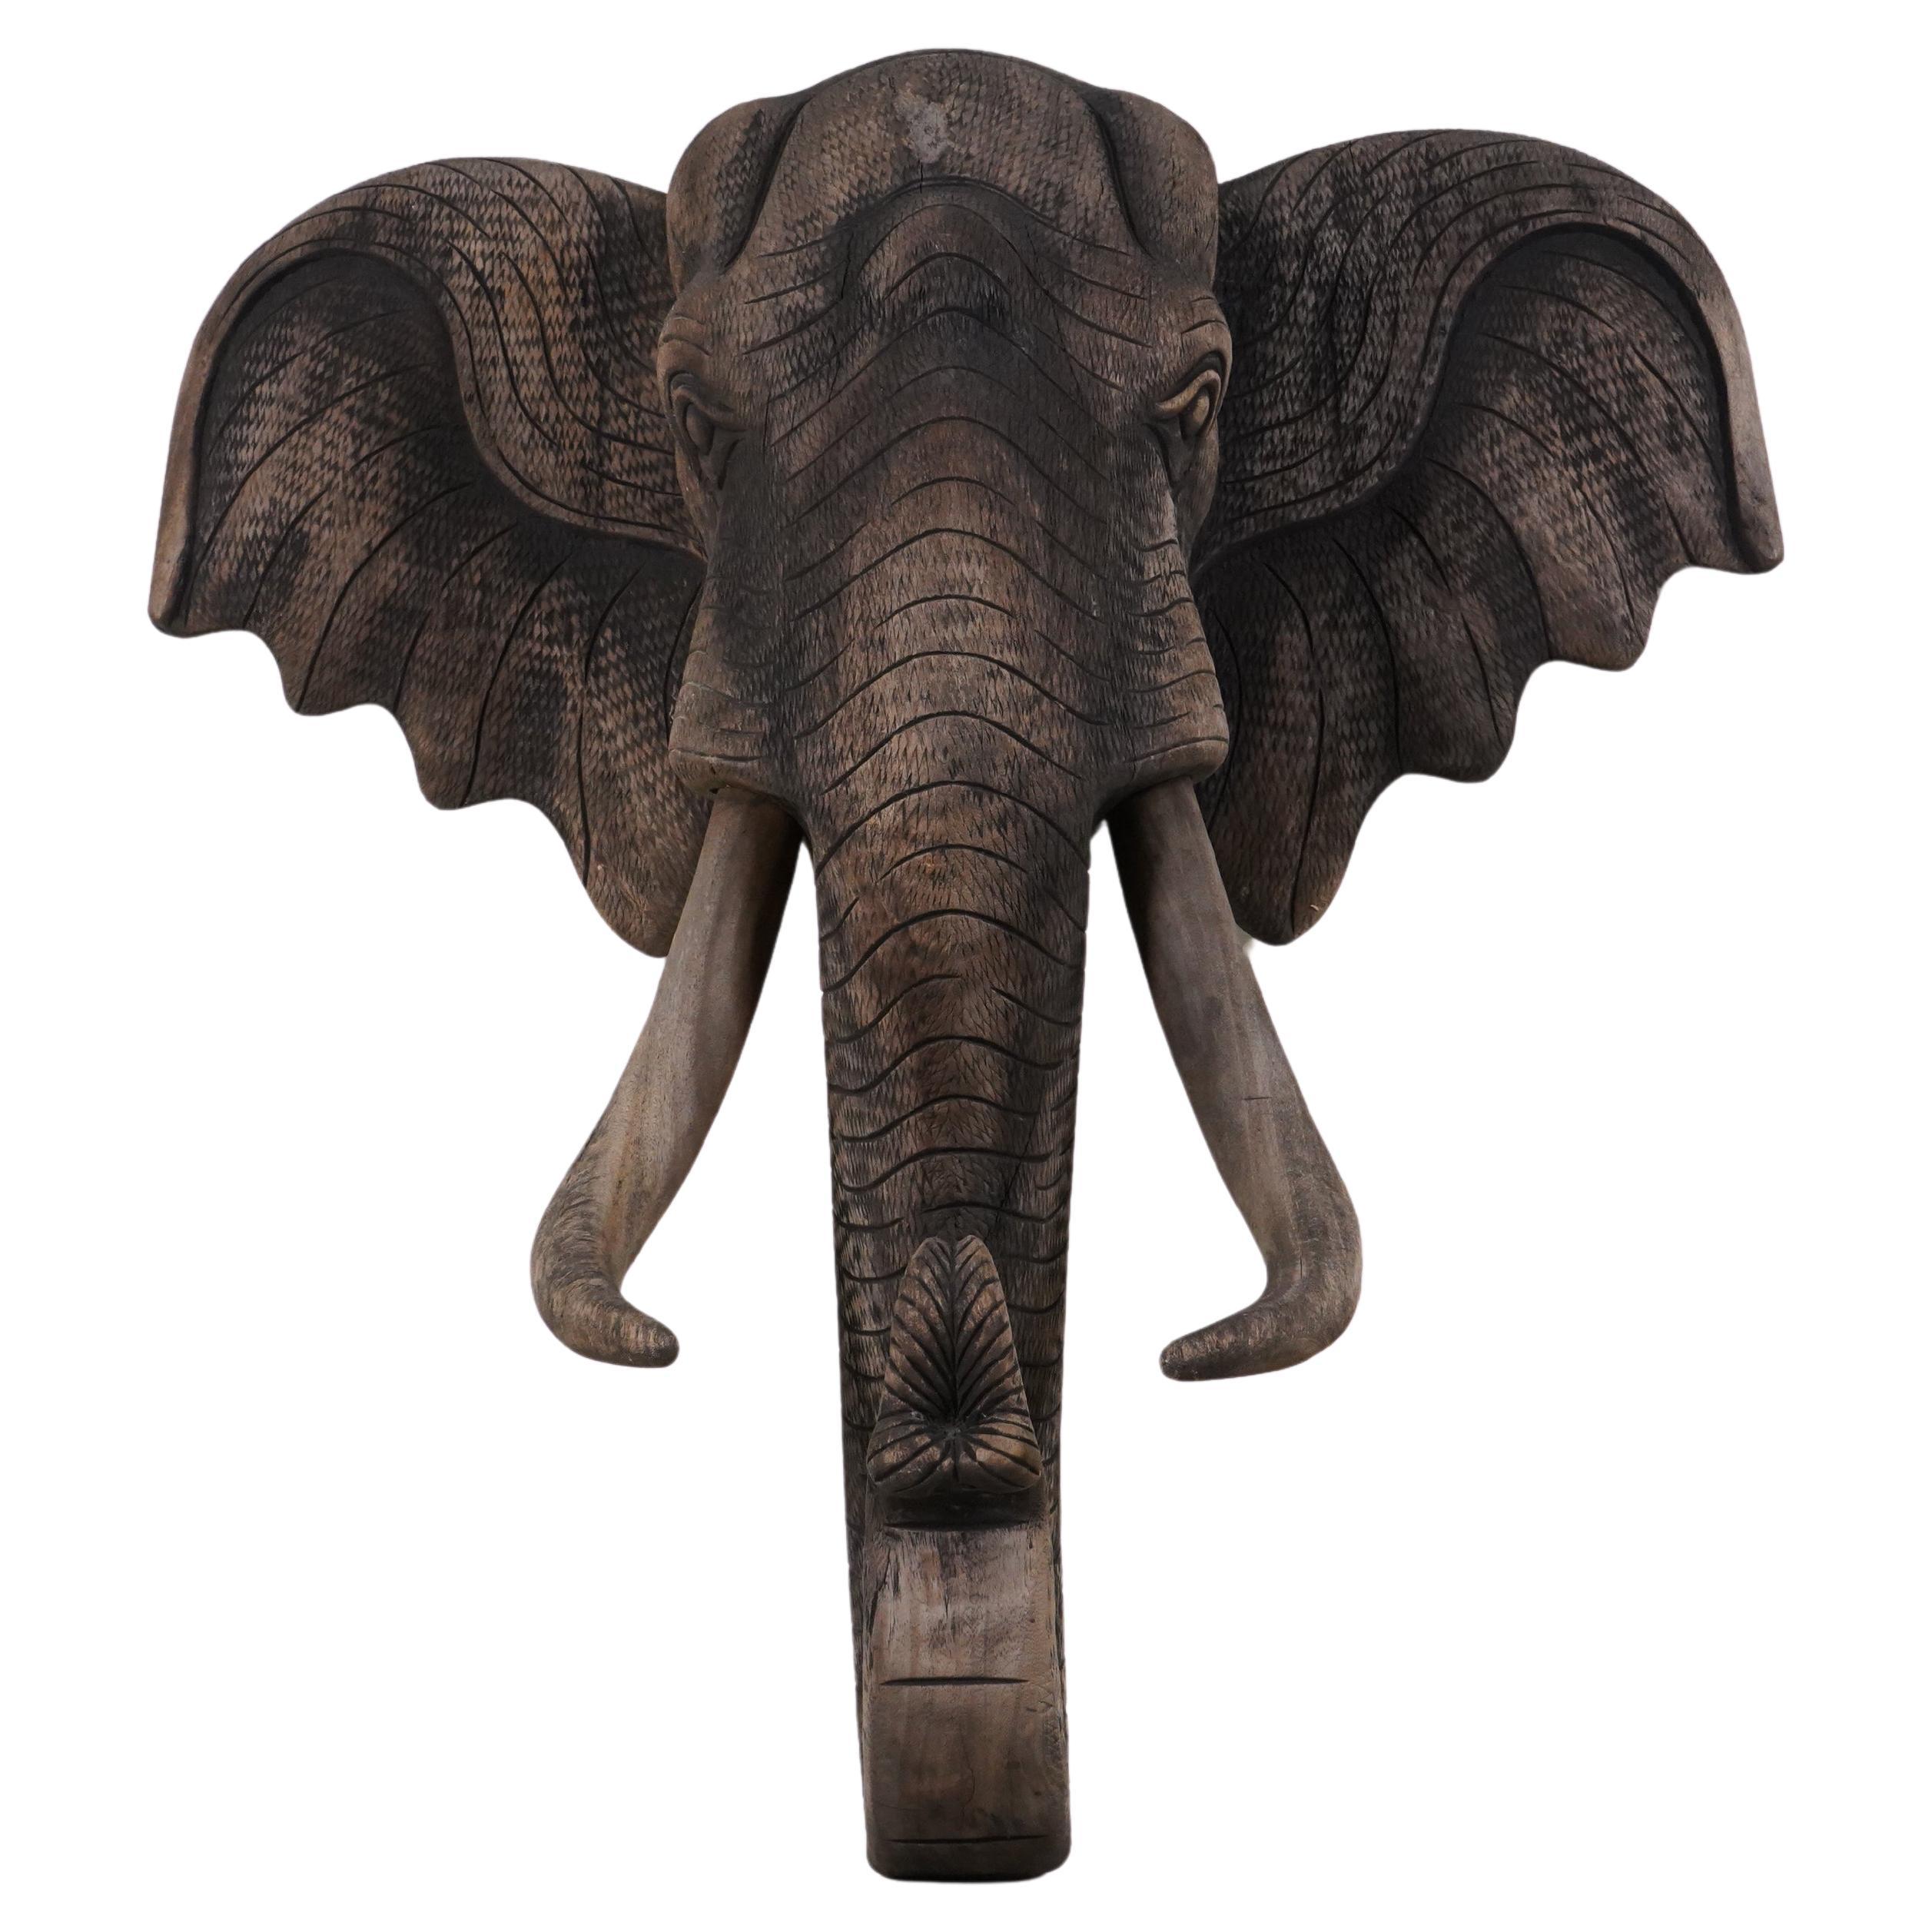 A Carved Wood Elephant Head For Sale